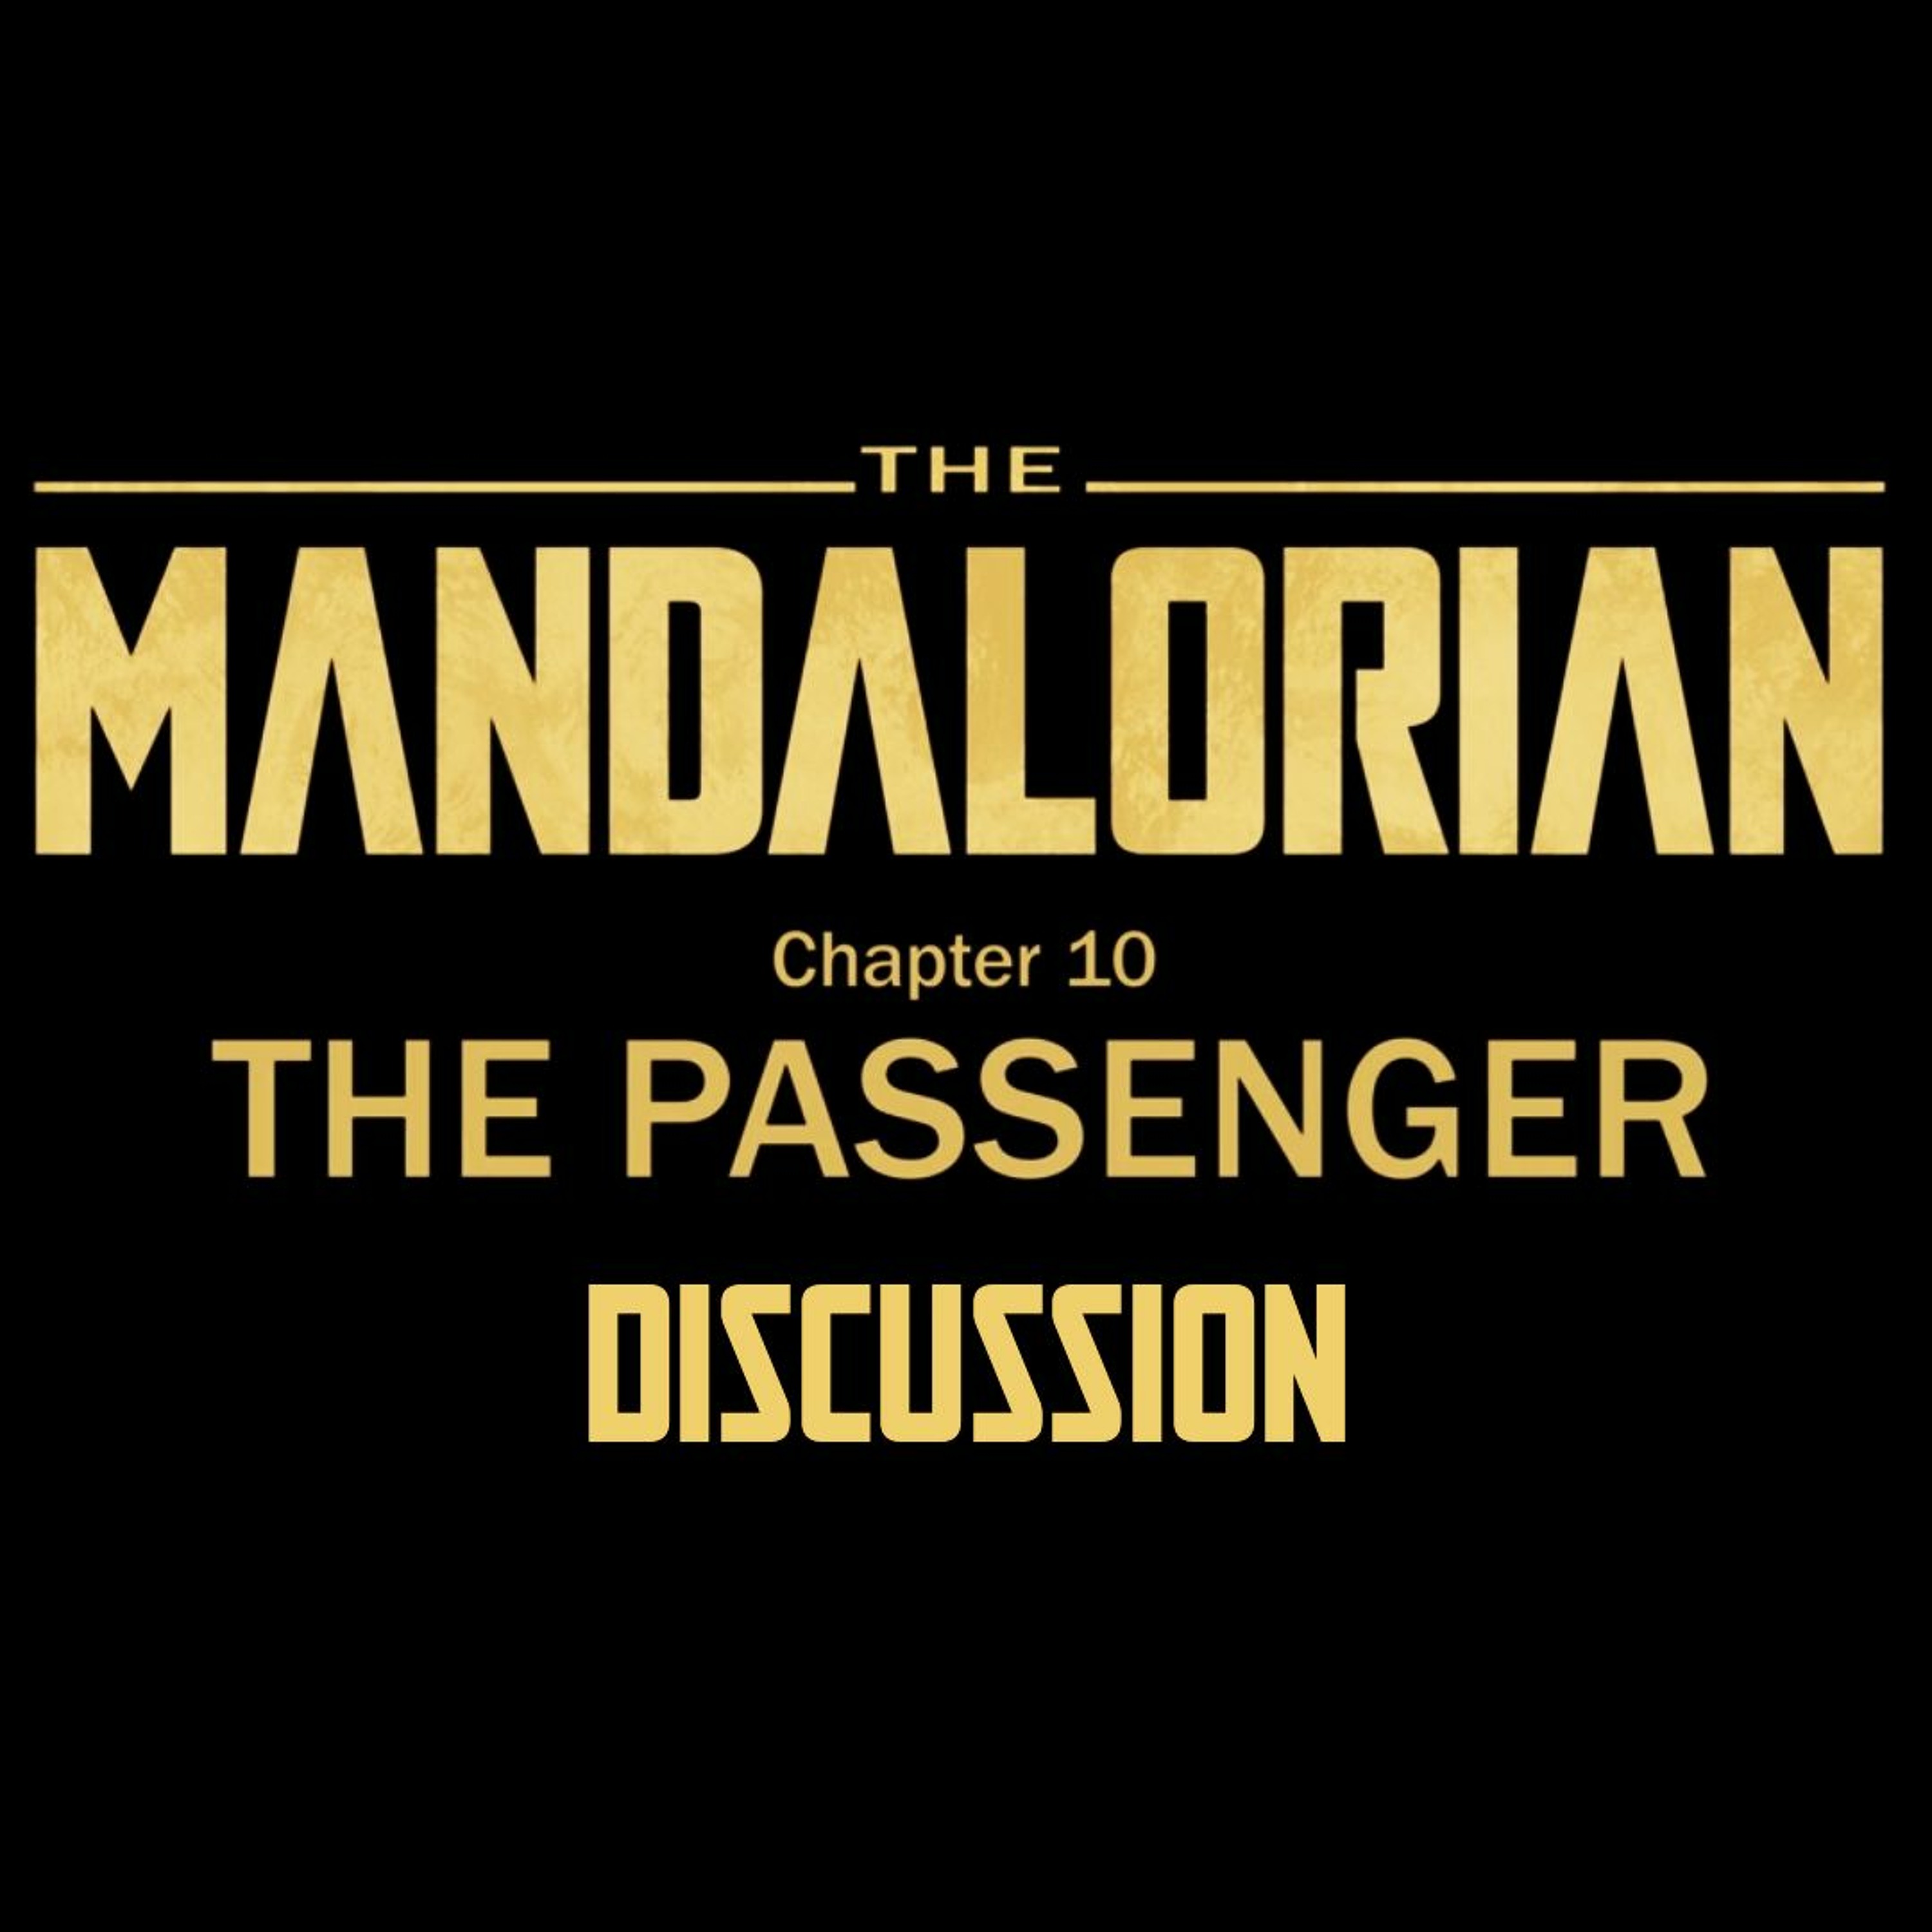 The Mandalorian Chapter 10 - The Passenger